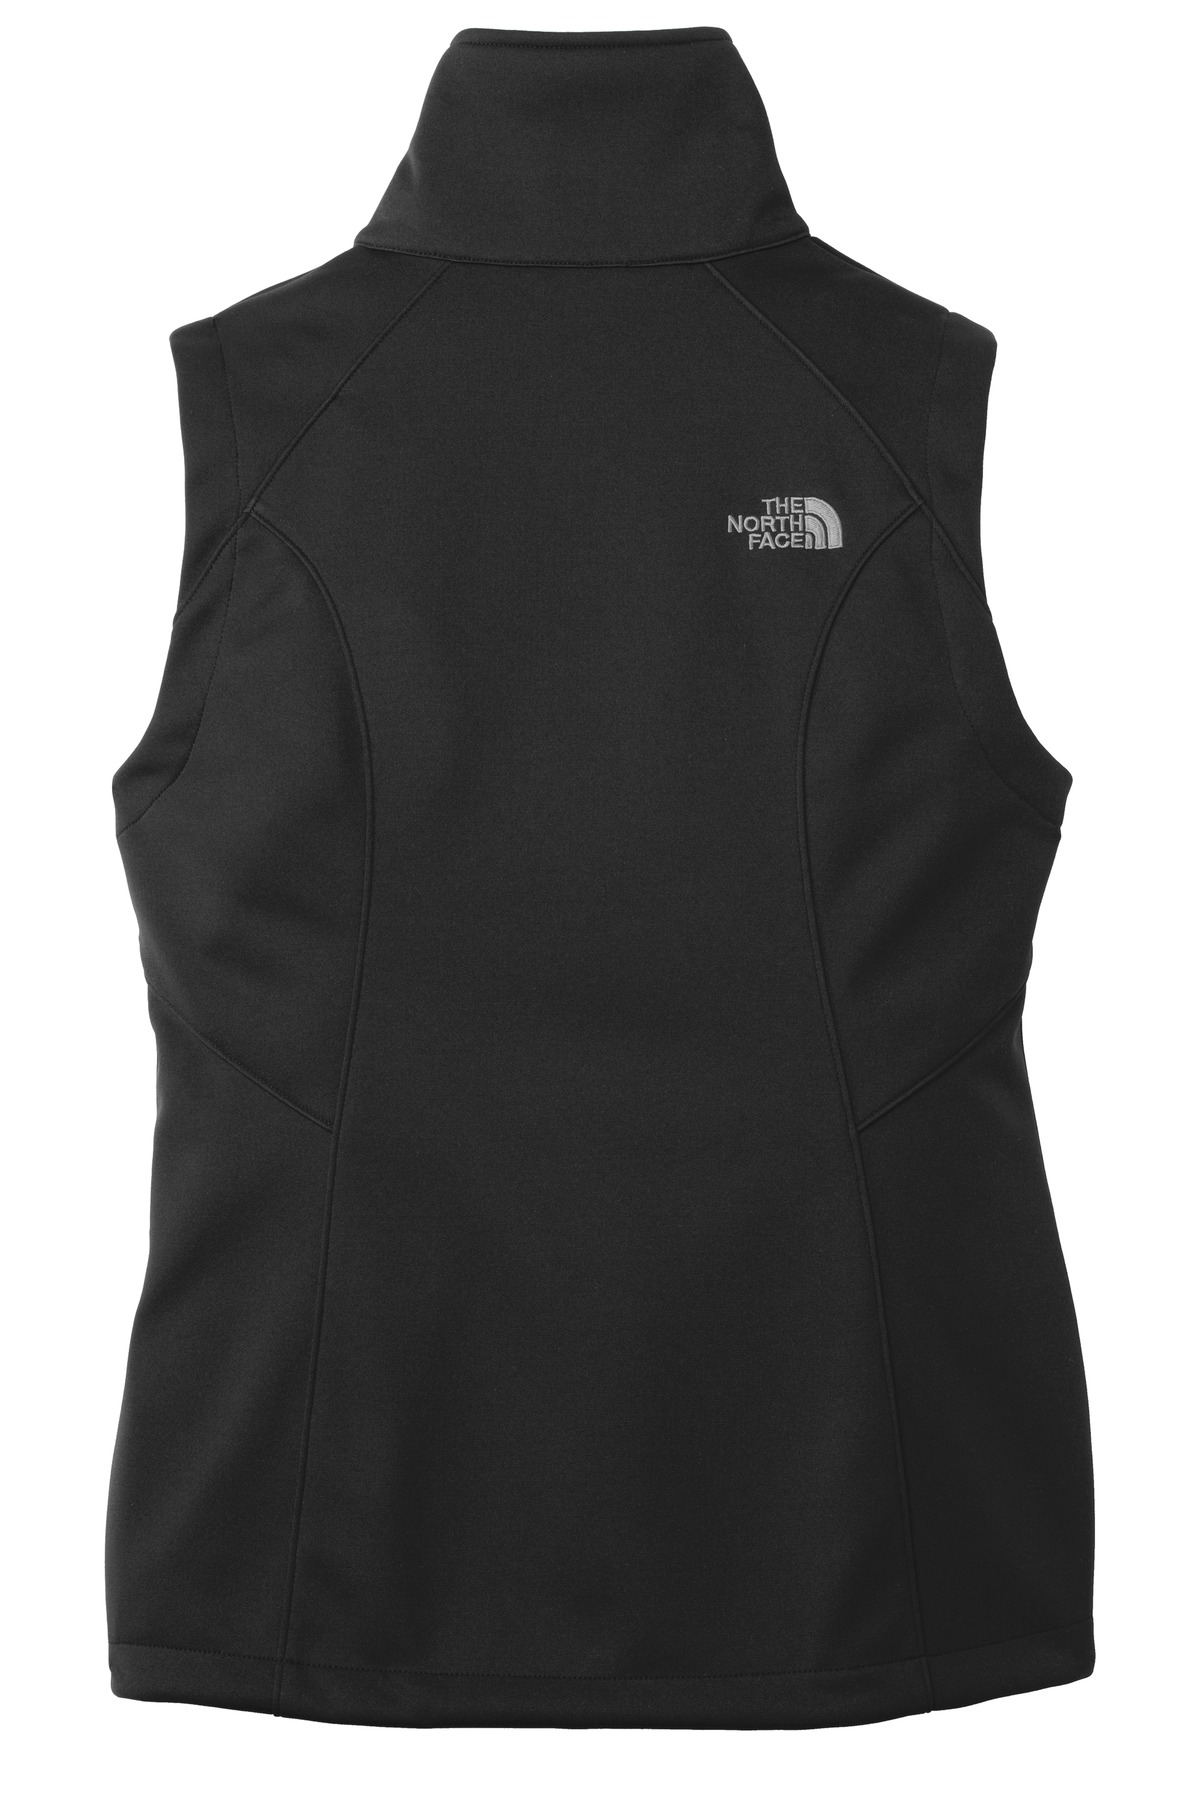 The North Face Ladies Ridgewall Soft Shell Vest